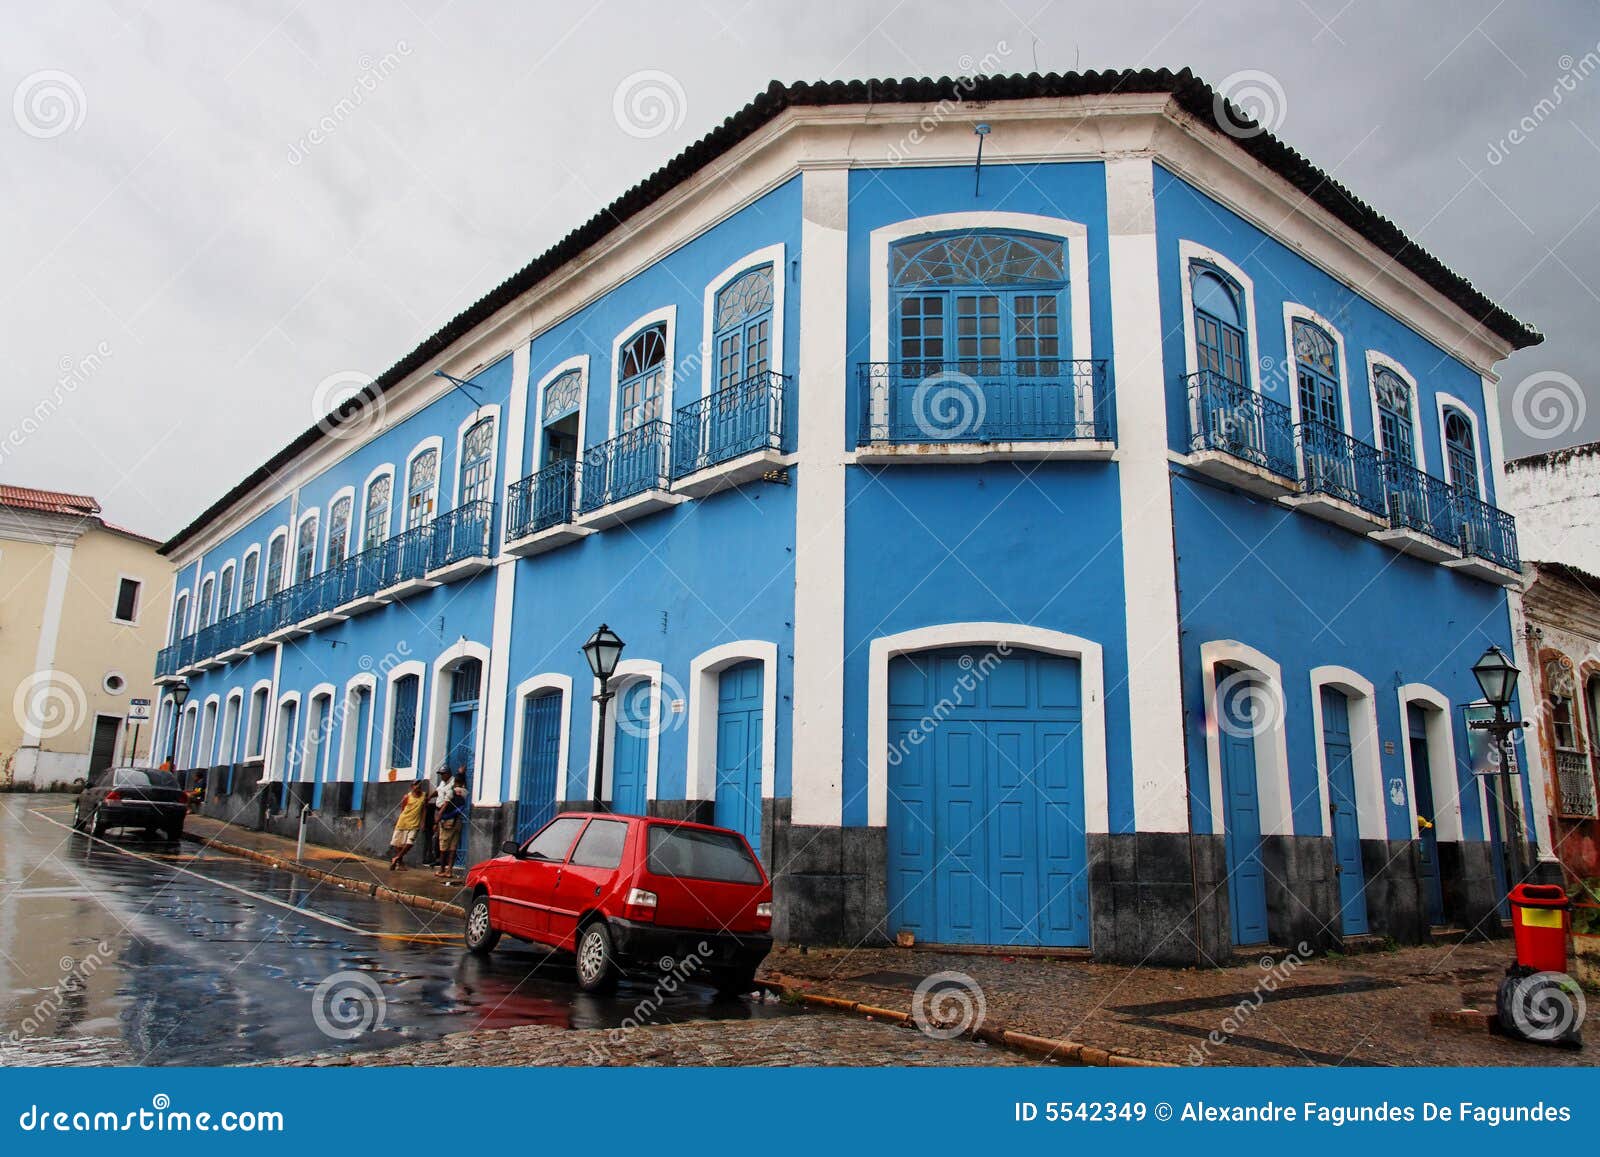 historical street in sao luis do maranhao